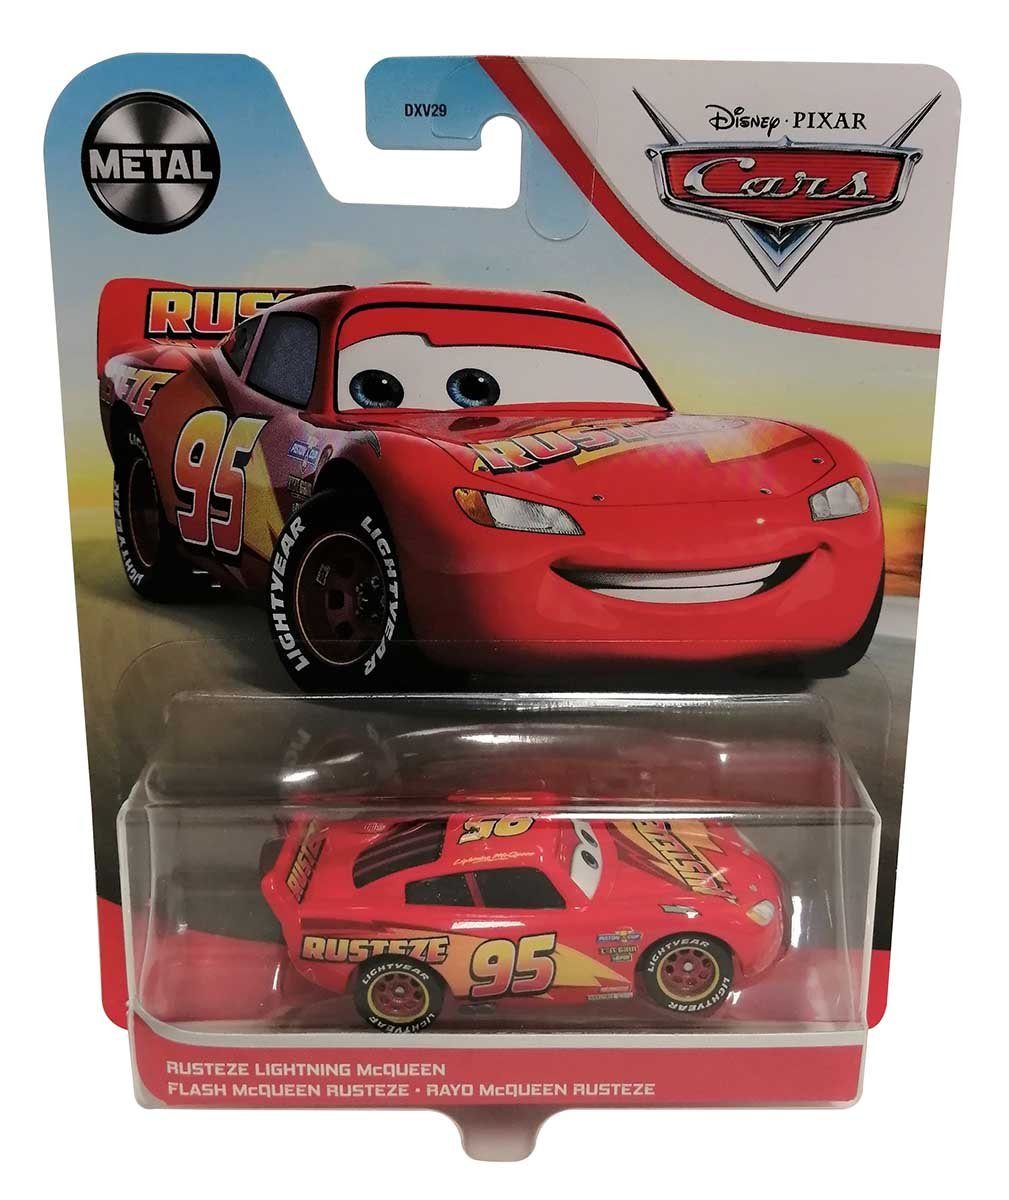 Lightning GXG33 Disney 2 McQueen Pixar Spielzeug-Auto Cars Disney Cars Mattel